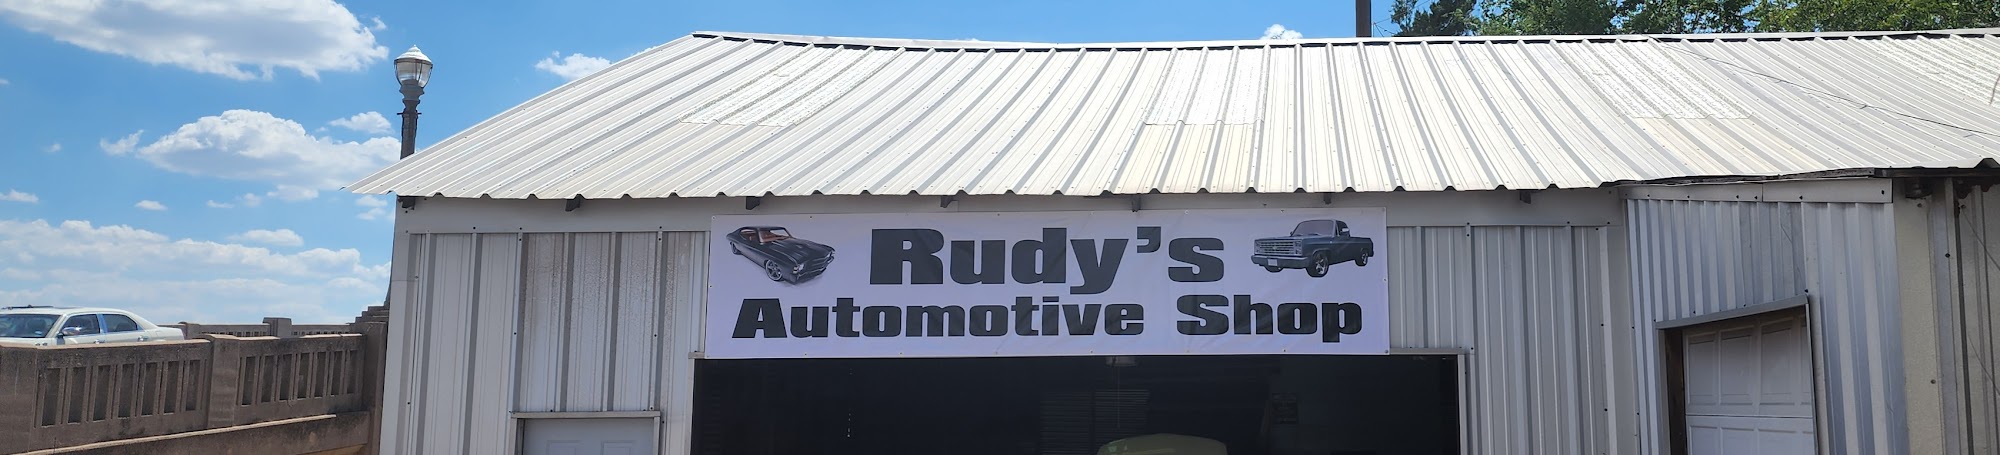 Rudy's Automotive shop